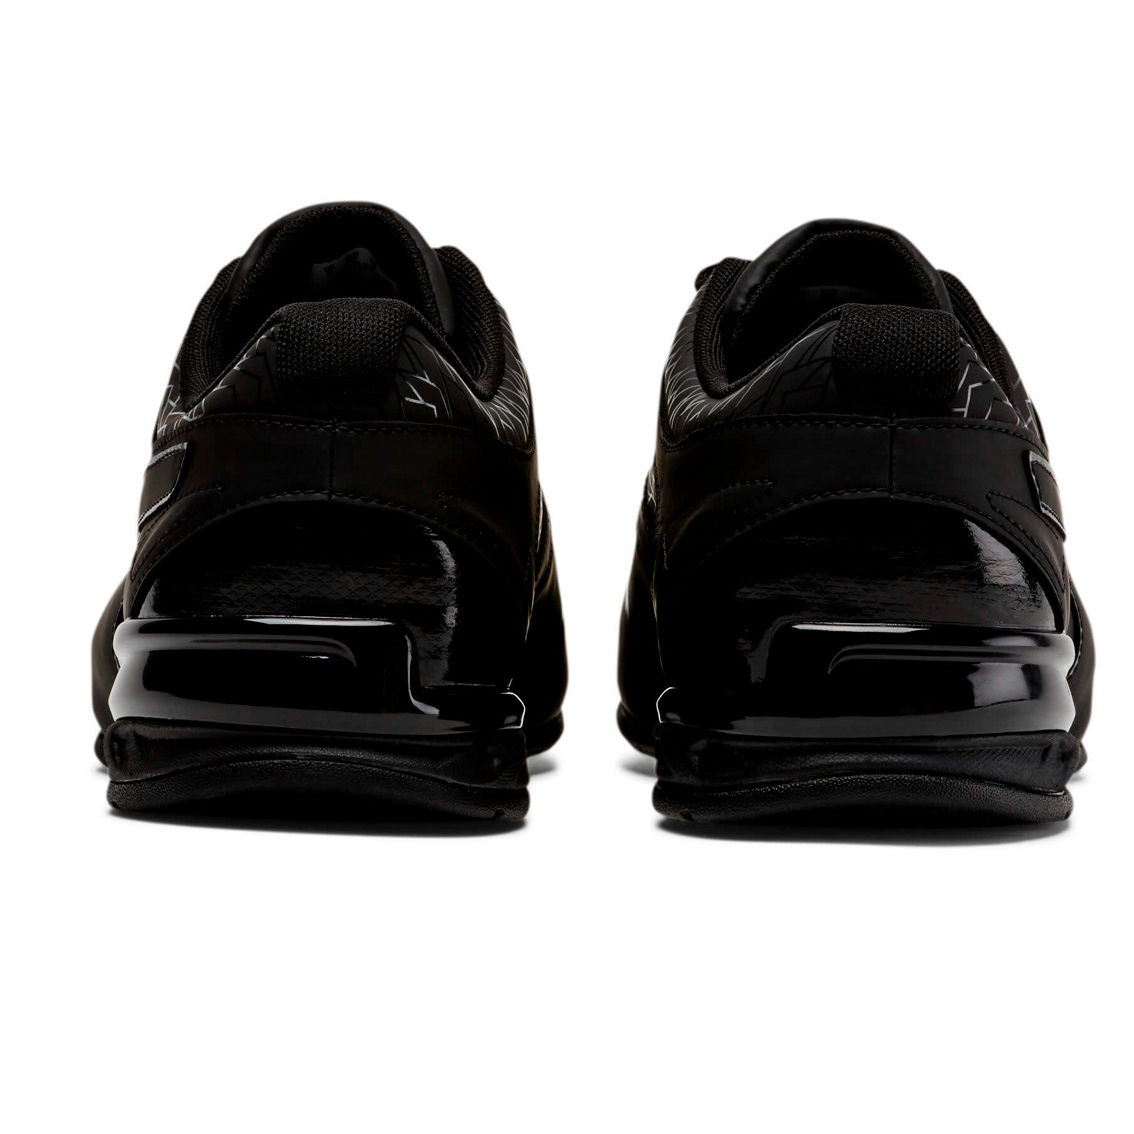 PUMA Men's Tazon 6 Fracture FM Wide Sneakers - Image 4 of 5